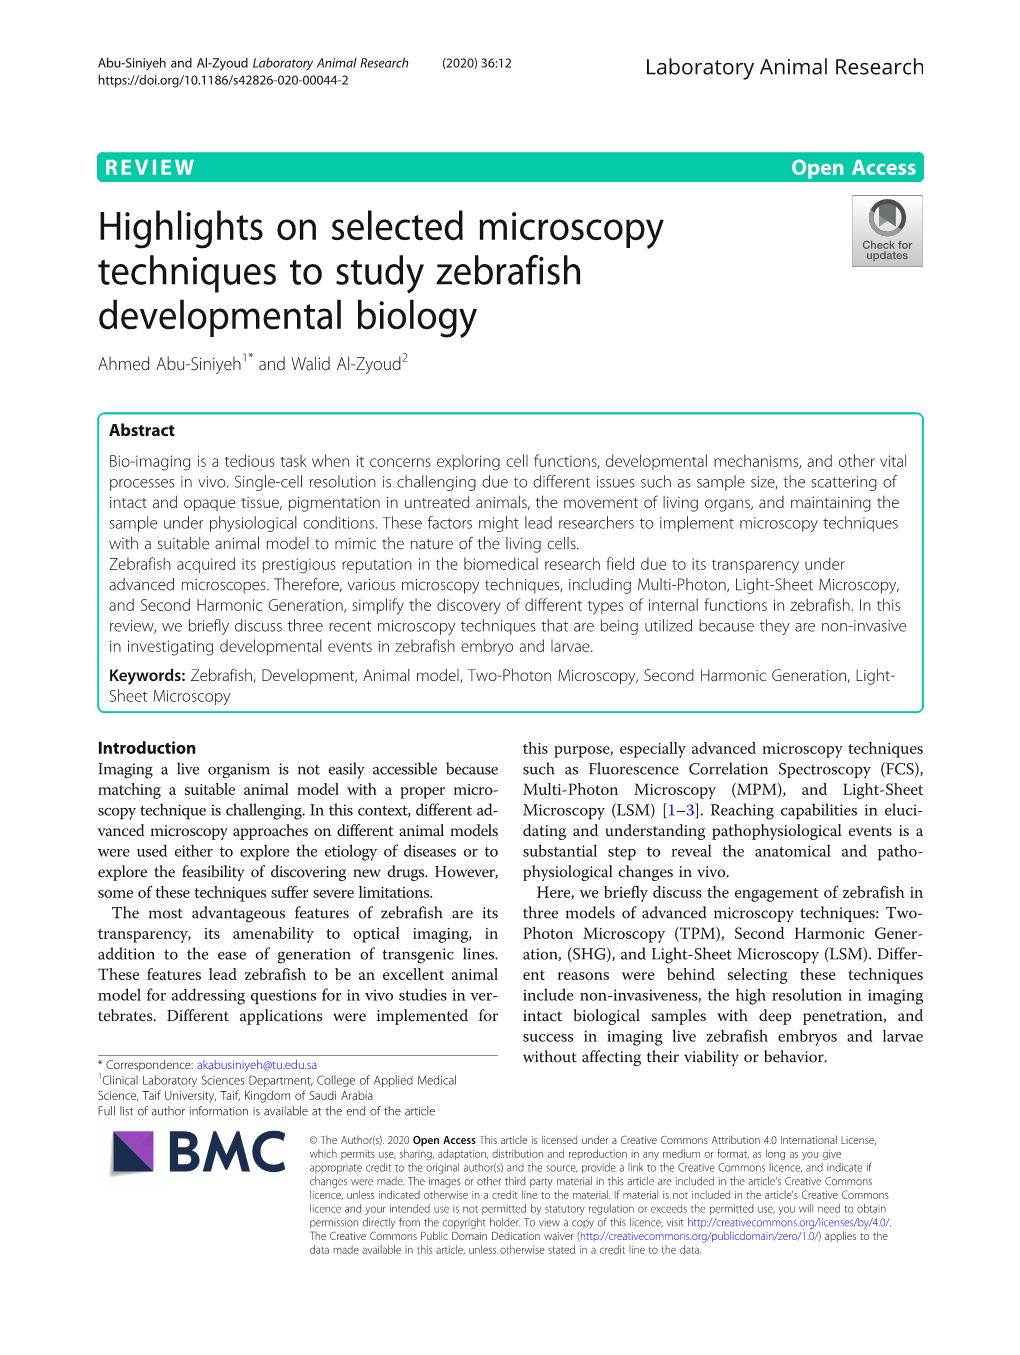 Highlights on Selected Microscopy Techniques to Study Zebrafish Developmental Biology Ahmed Abu-Siniyeh1* and Walid Al-Zyoud2